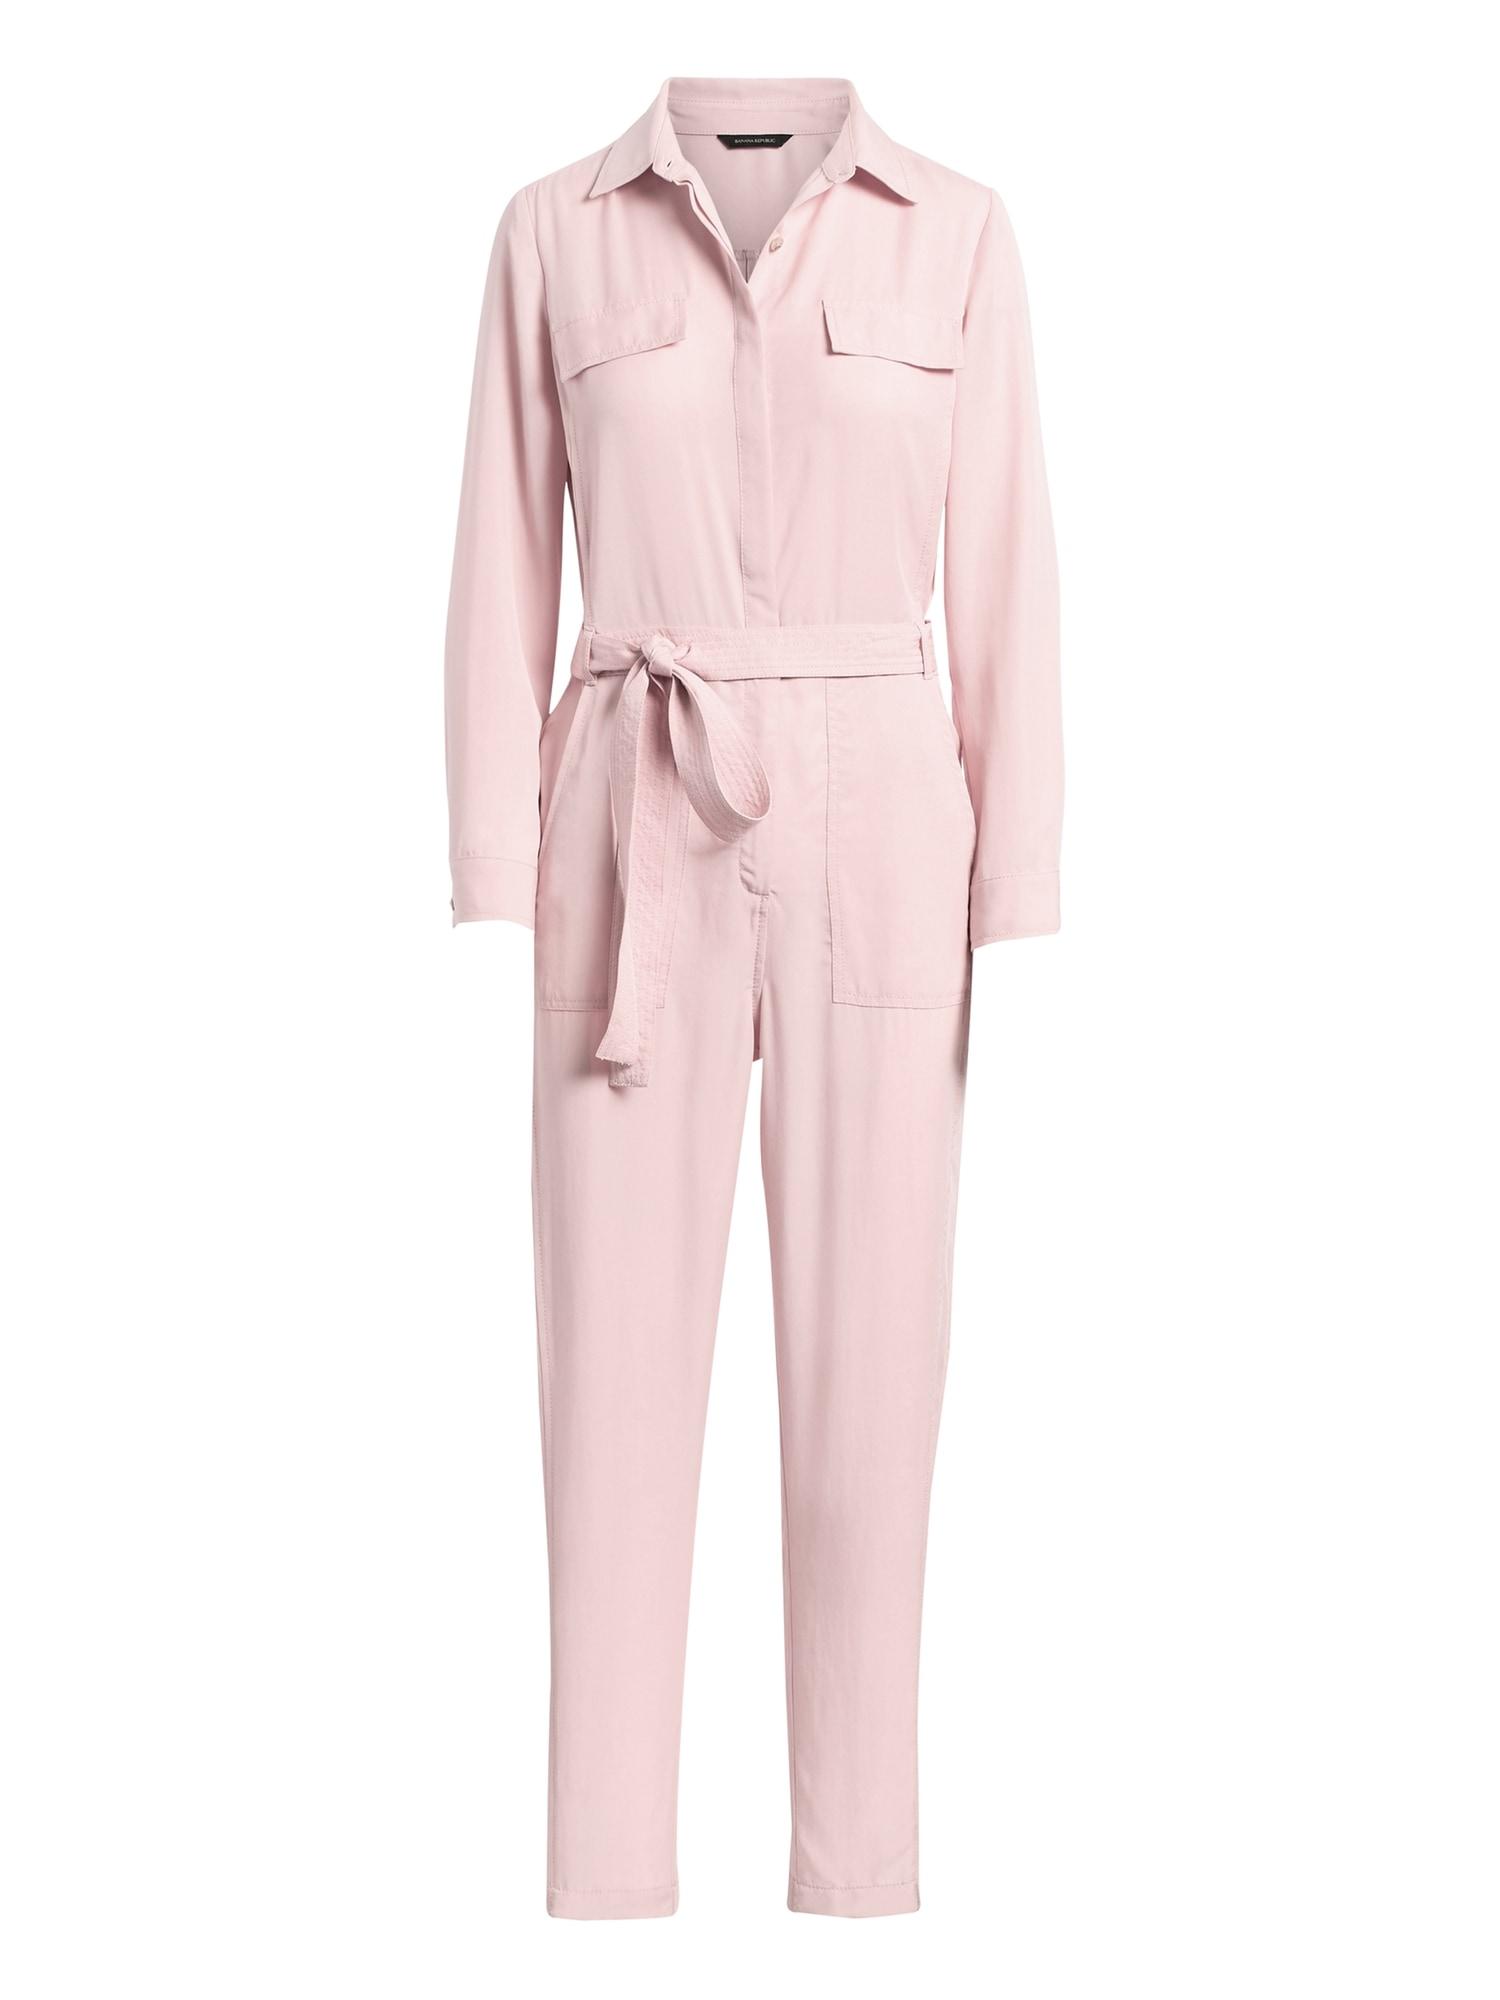 Banana Republic Tm Flight Jumpsuit in Blush Pink (Pink) - Save 50% - Lyst